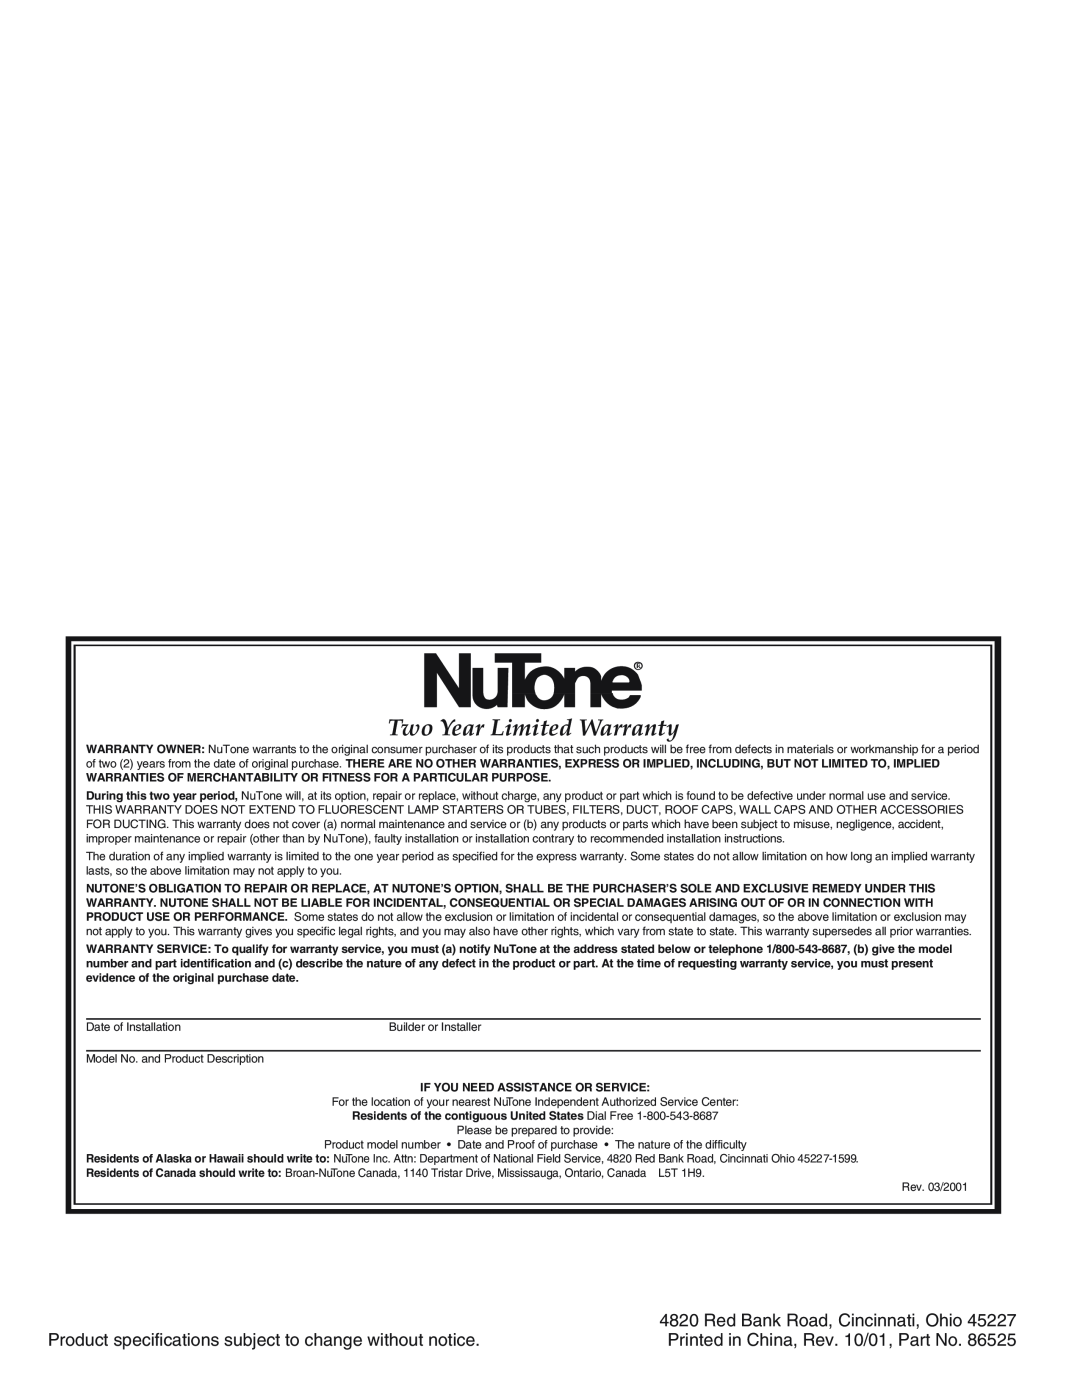 NuTone IM-440 Series installation instructions Two Year Limited Warranty, Red Bank Road, Cincinnati, Ohio 